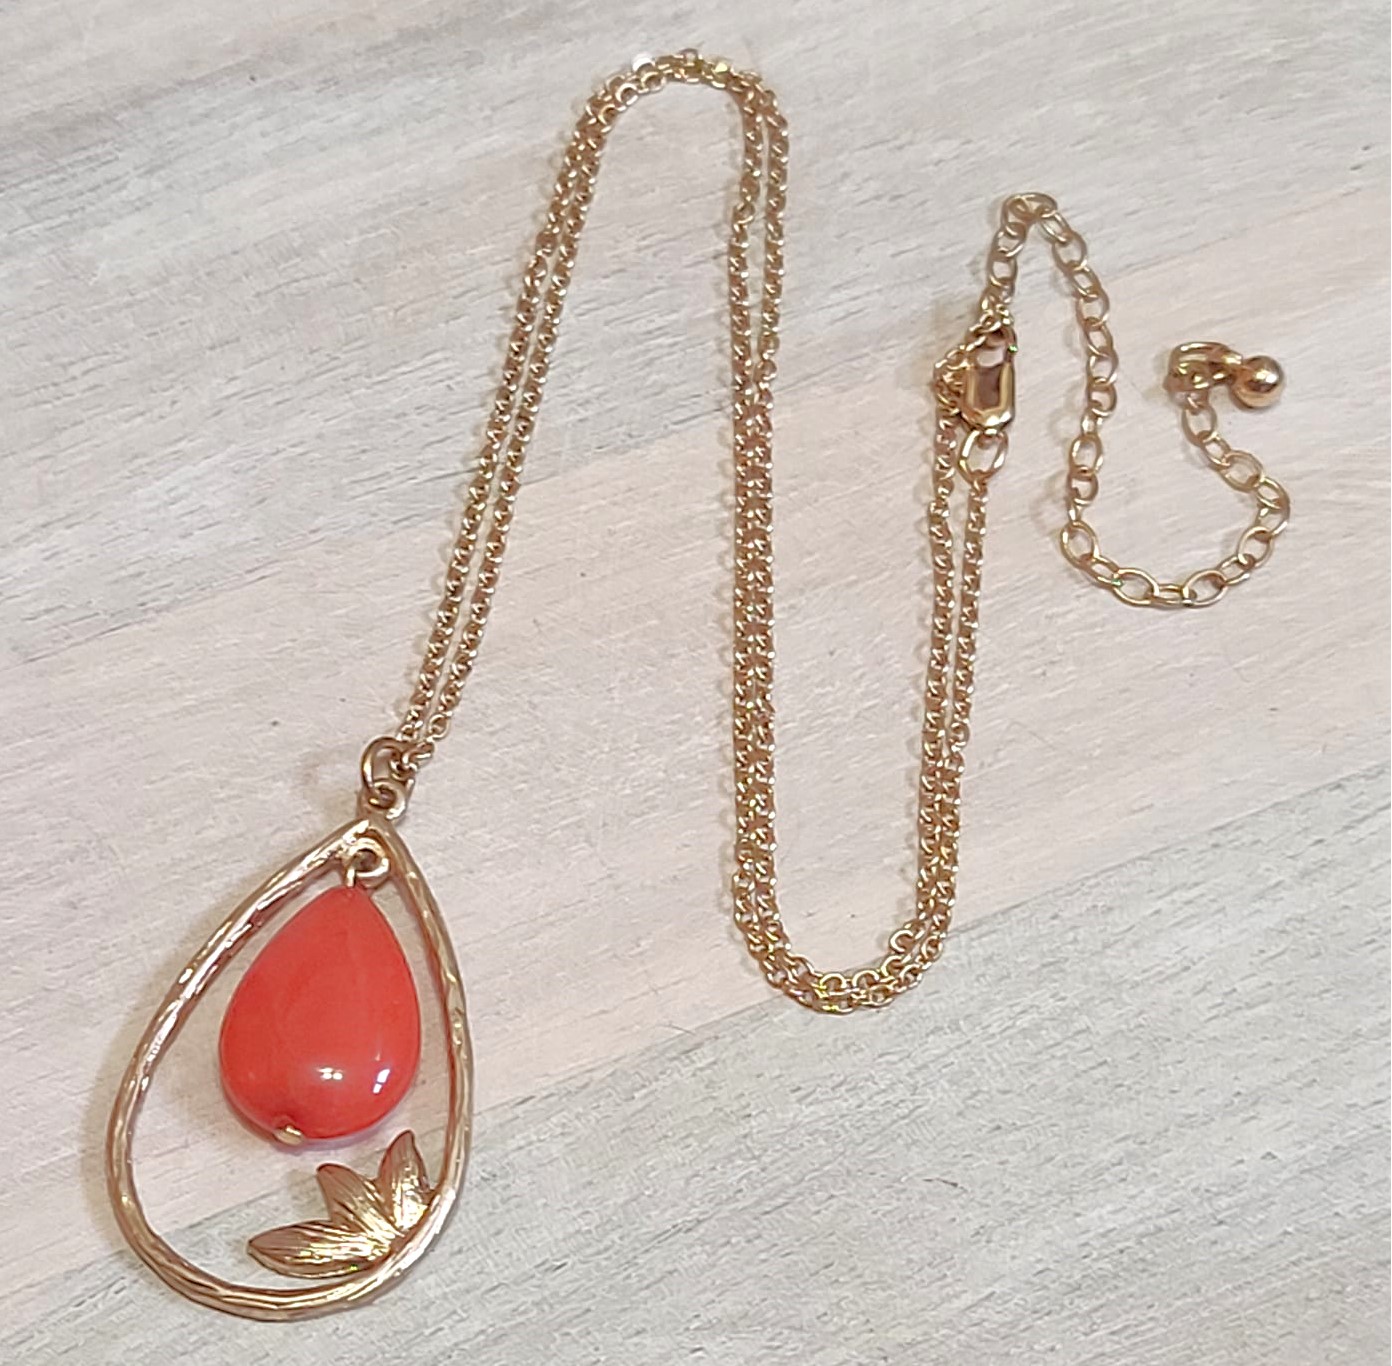 Gemstone pendant necklace, coral orange dyed quartz, with leaf pattern on chain